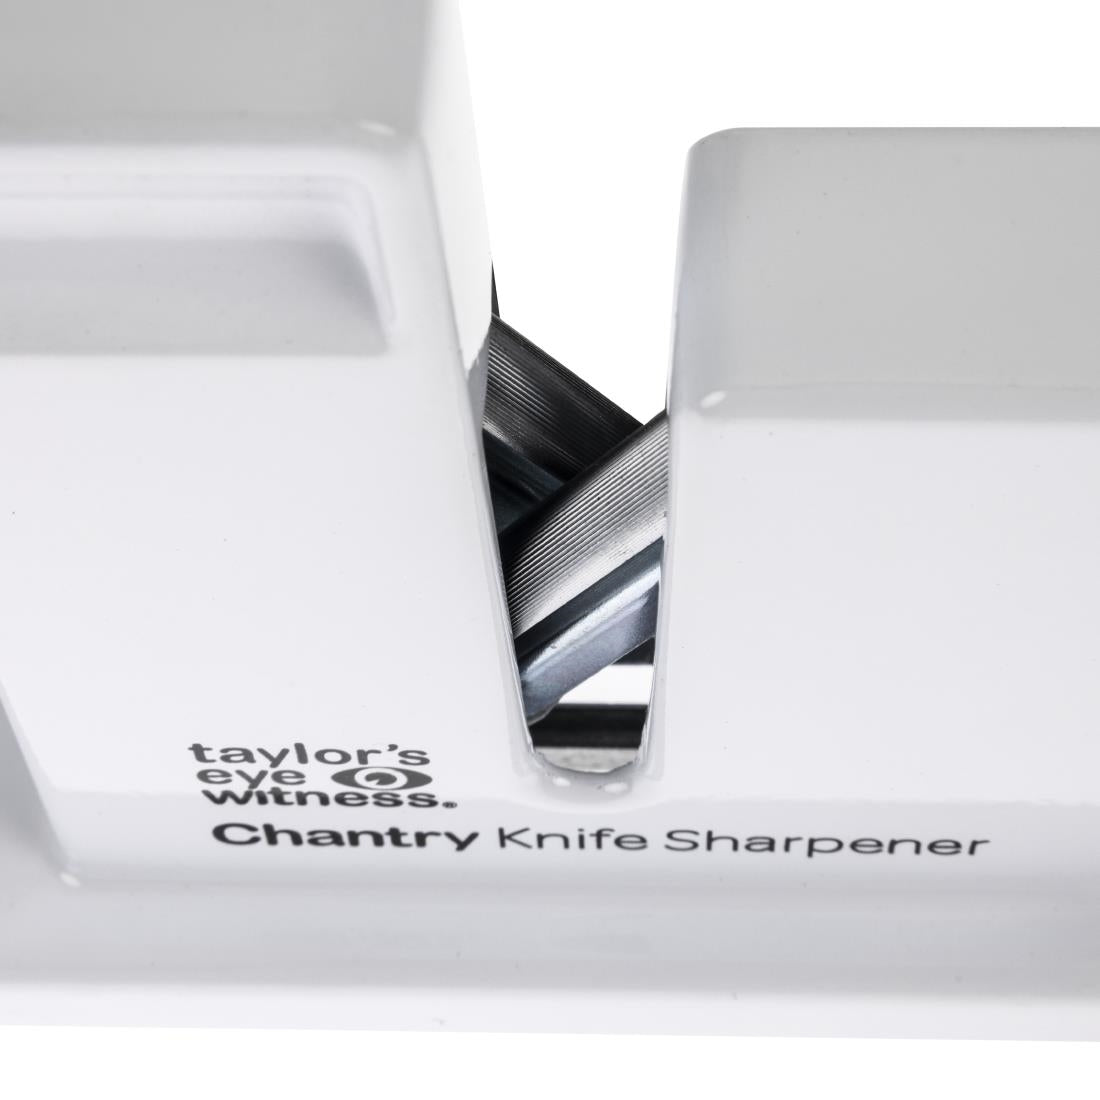 D133 Chantry Knife Sharpener JD Catering Equipment Solutions Ltd